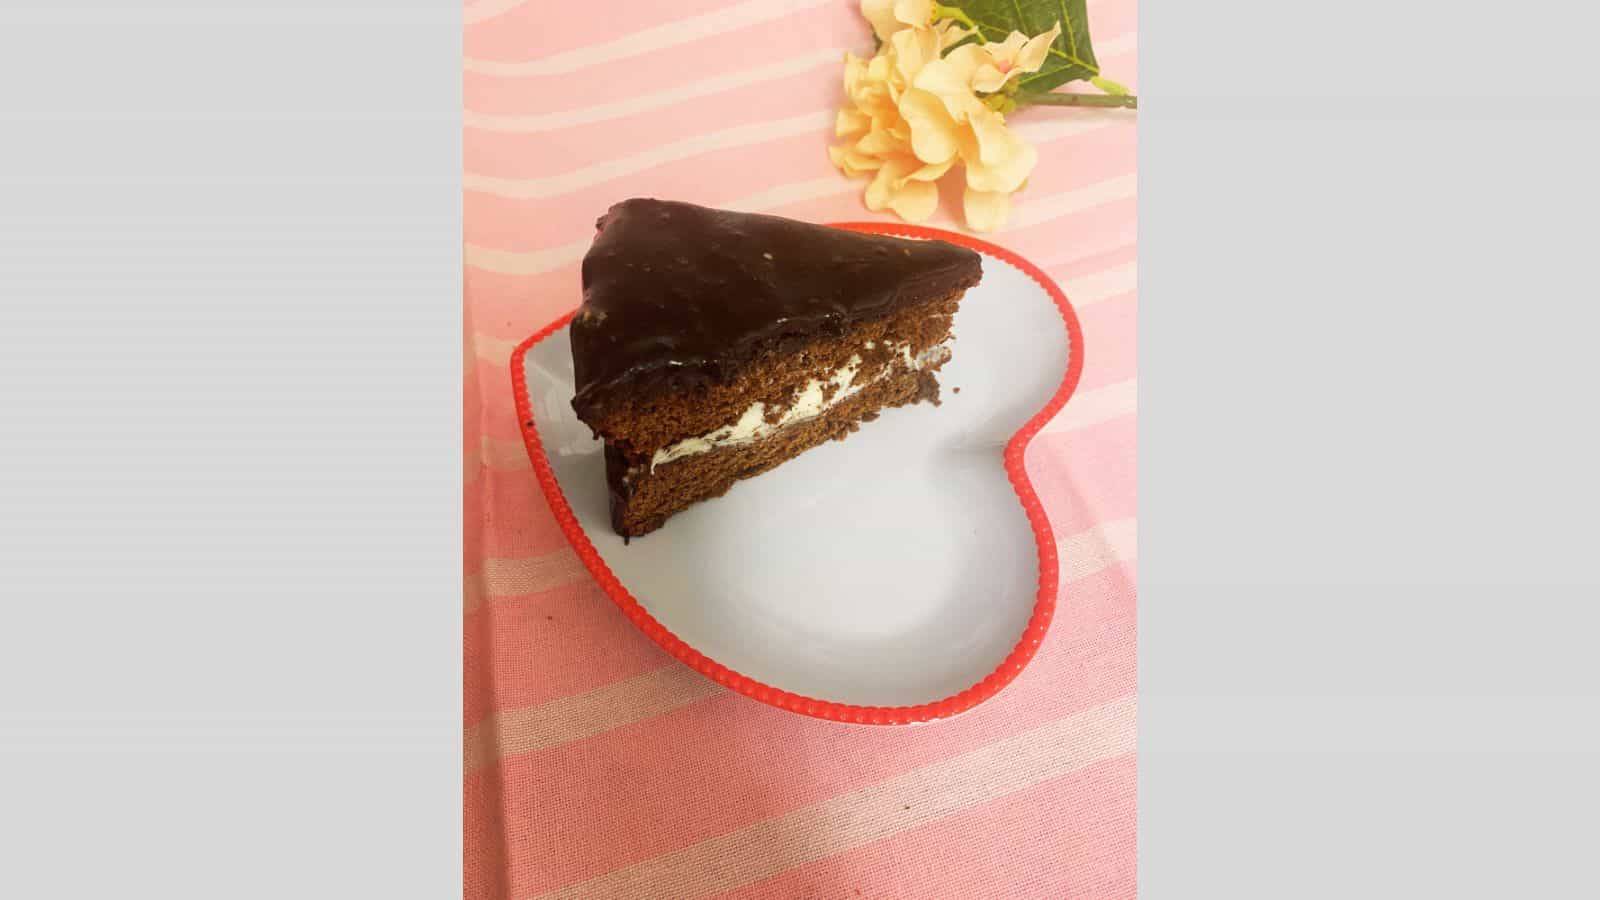 Slice of chocolate cake on heart-shaped plate.